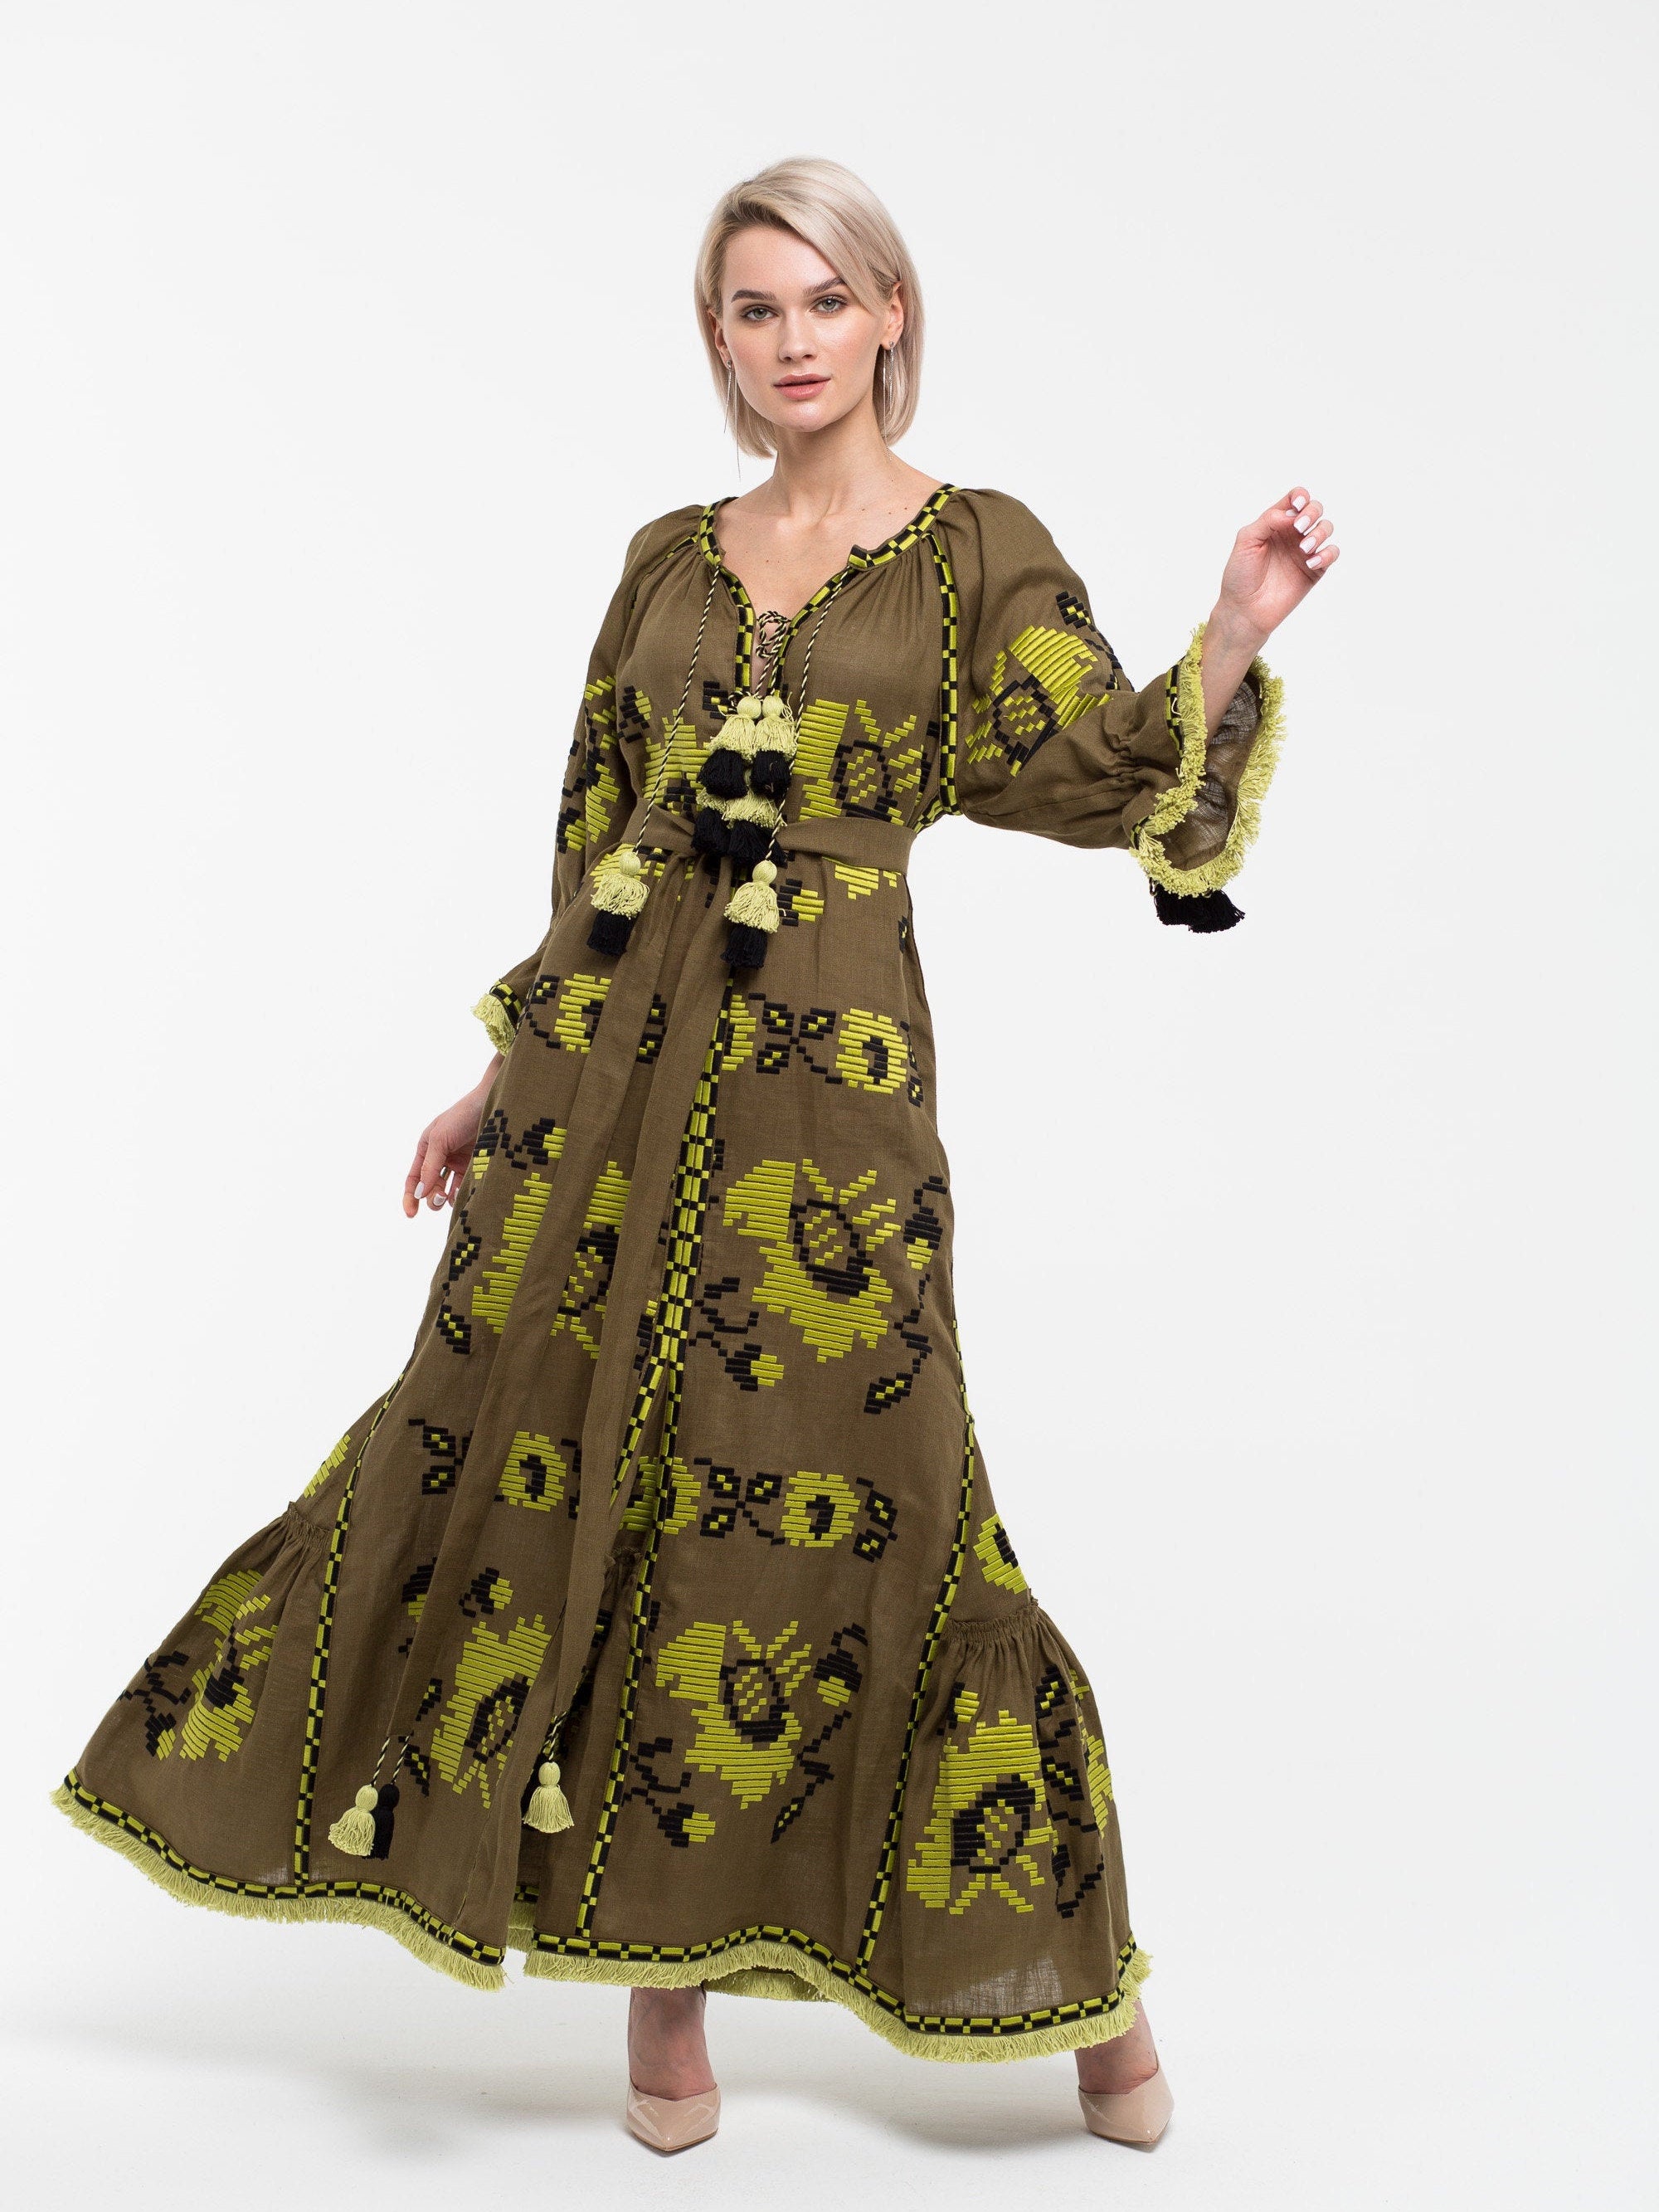 Embroidered olive linen dress kaftan Fashion boho outfit with floral ukraine embroidery Vyshyvanka robe